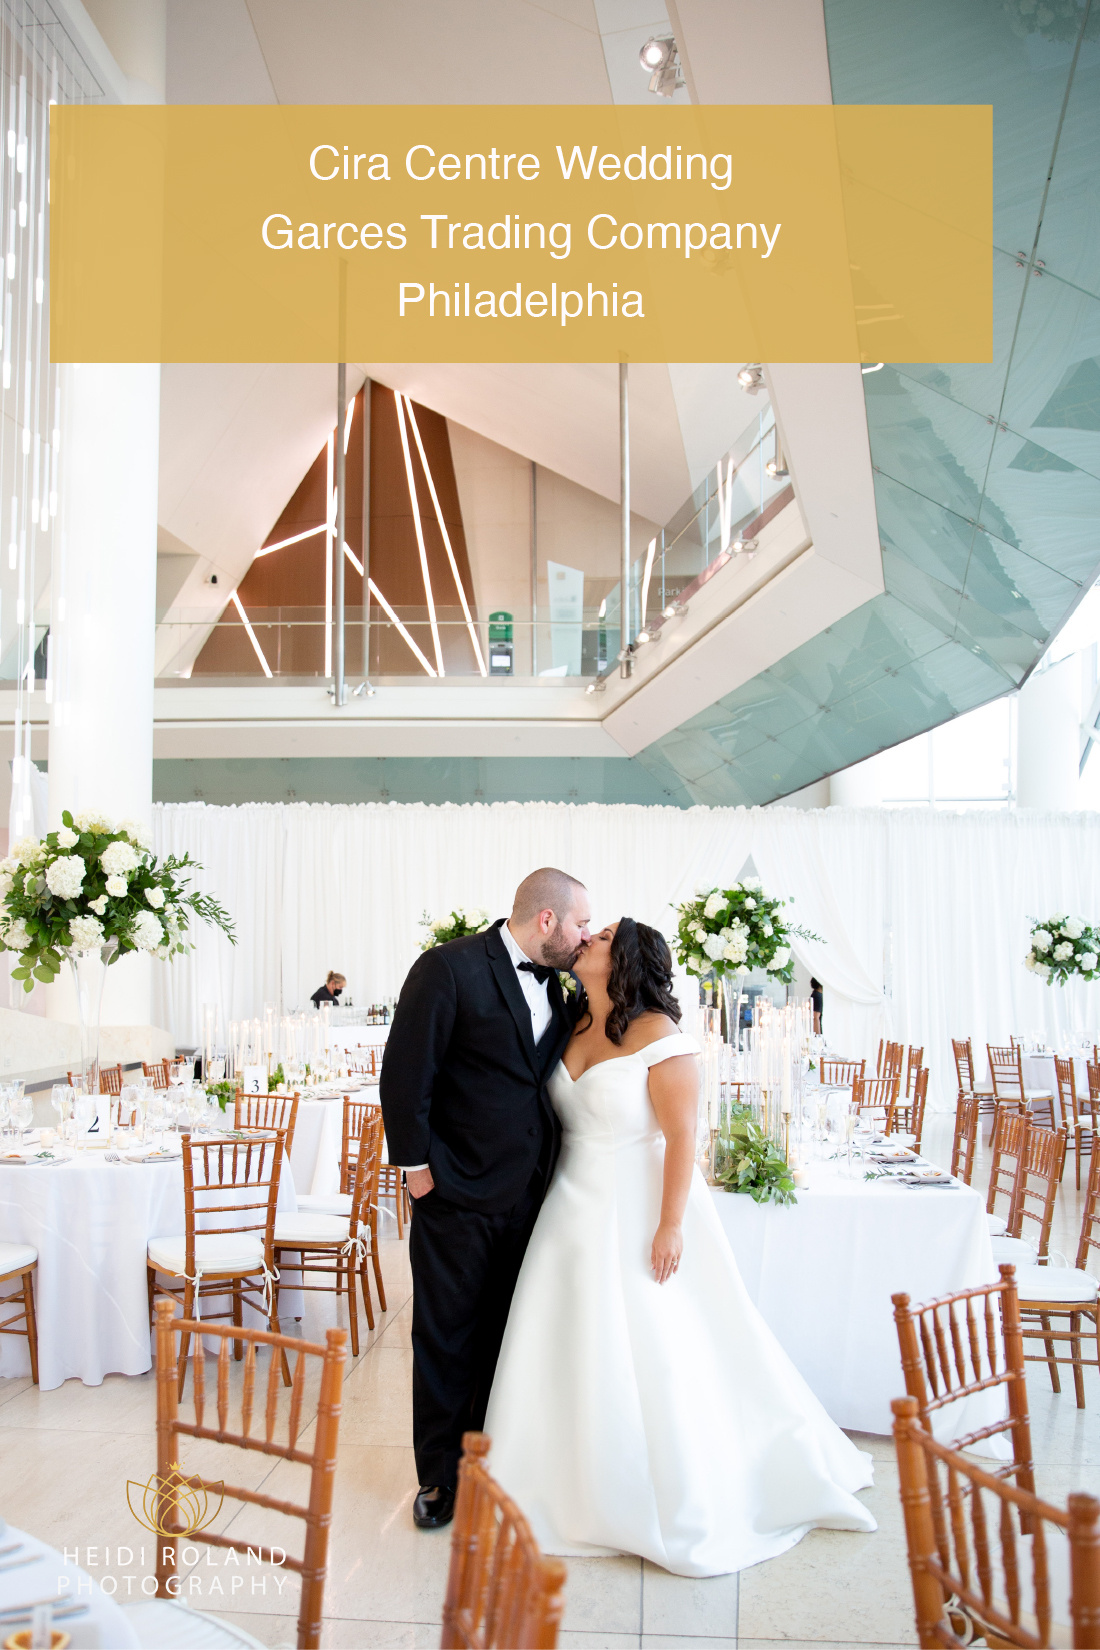 Cira Centre Wedding Garces Trading Company in Philadelphia by Heidi Roland photography